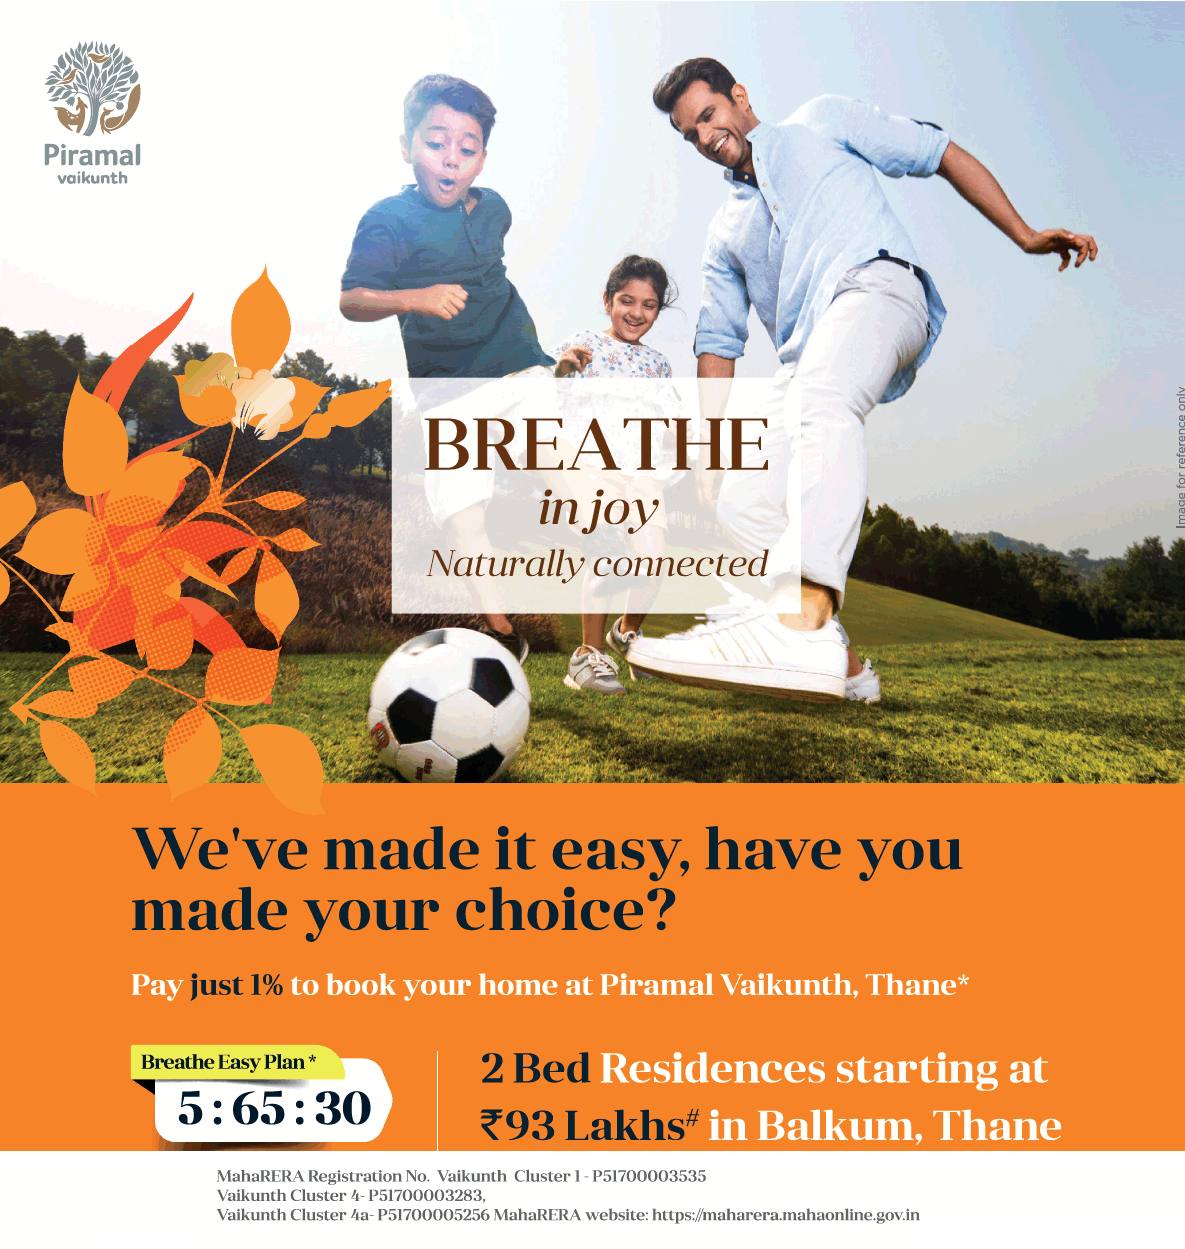 Avail breathe easy plan of 5:65:30 at Piramal Vaikunth in Mumbai Update